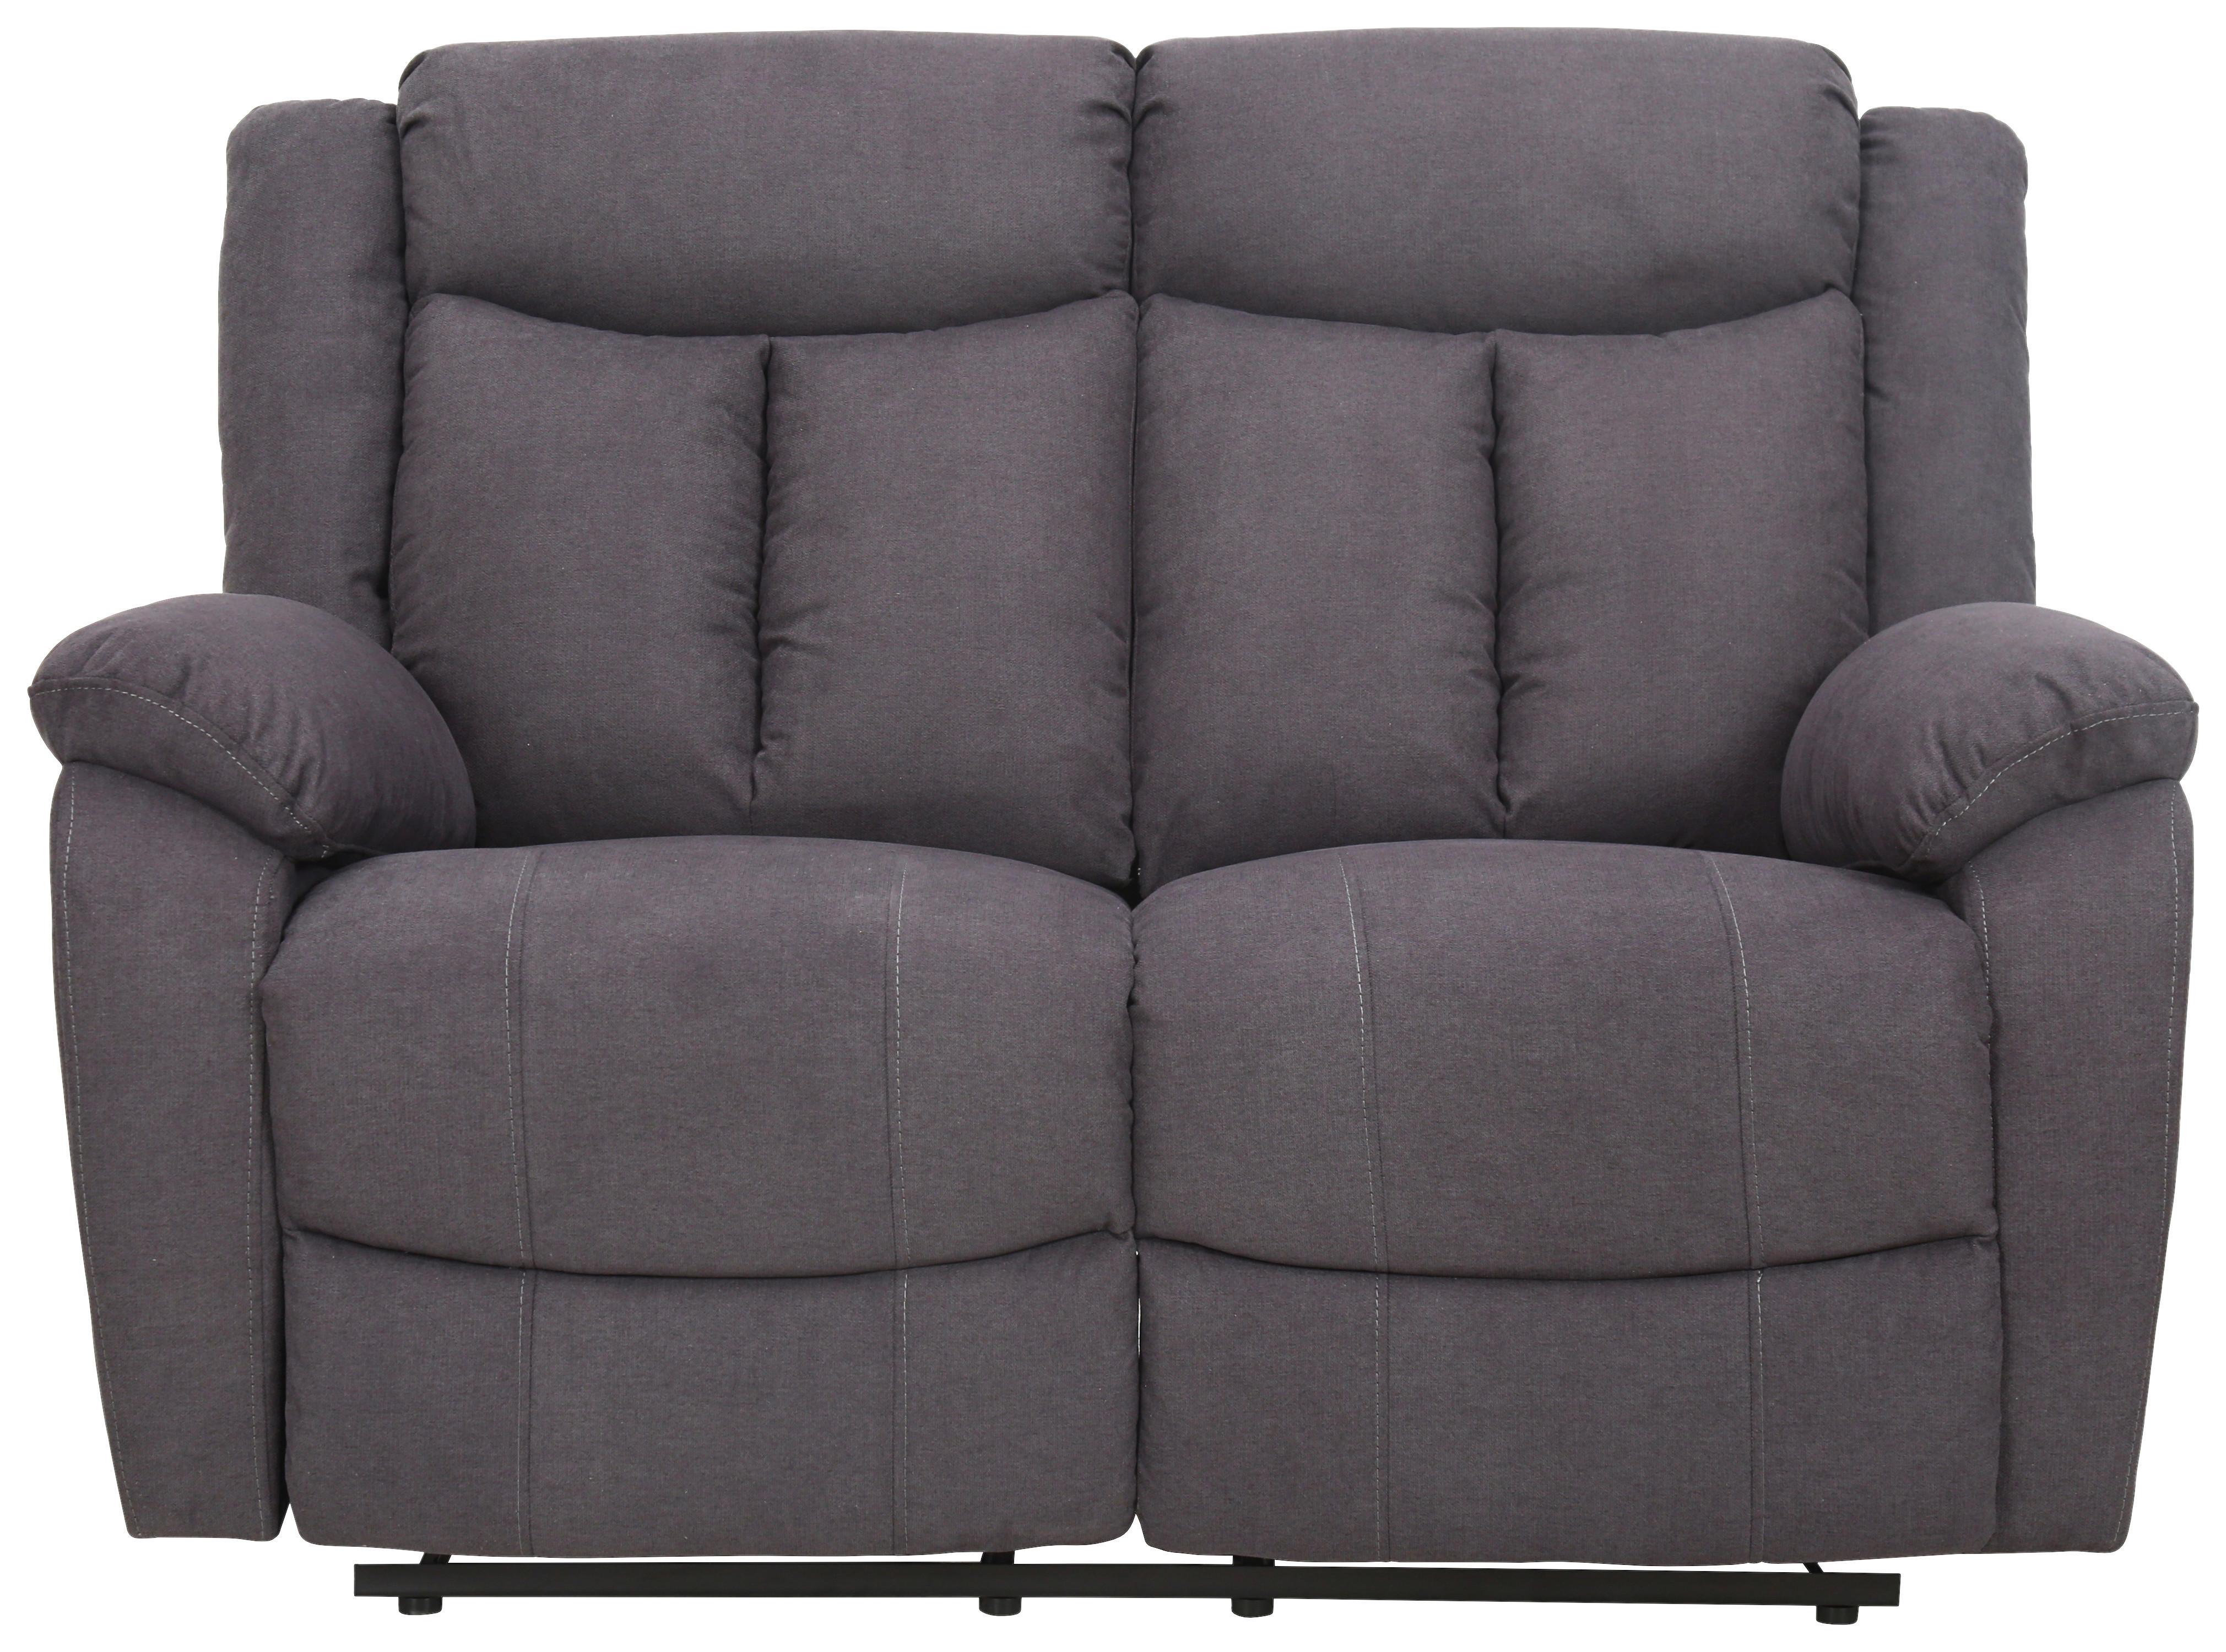 2-Sitzer-Sofa + Relaxfunktion Oxford Grau - Schwarz/Grau, KONVENTIONELL, Holz/Textil (138/103/96cm) - Ondega